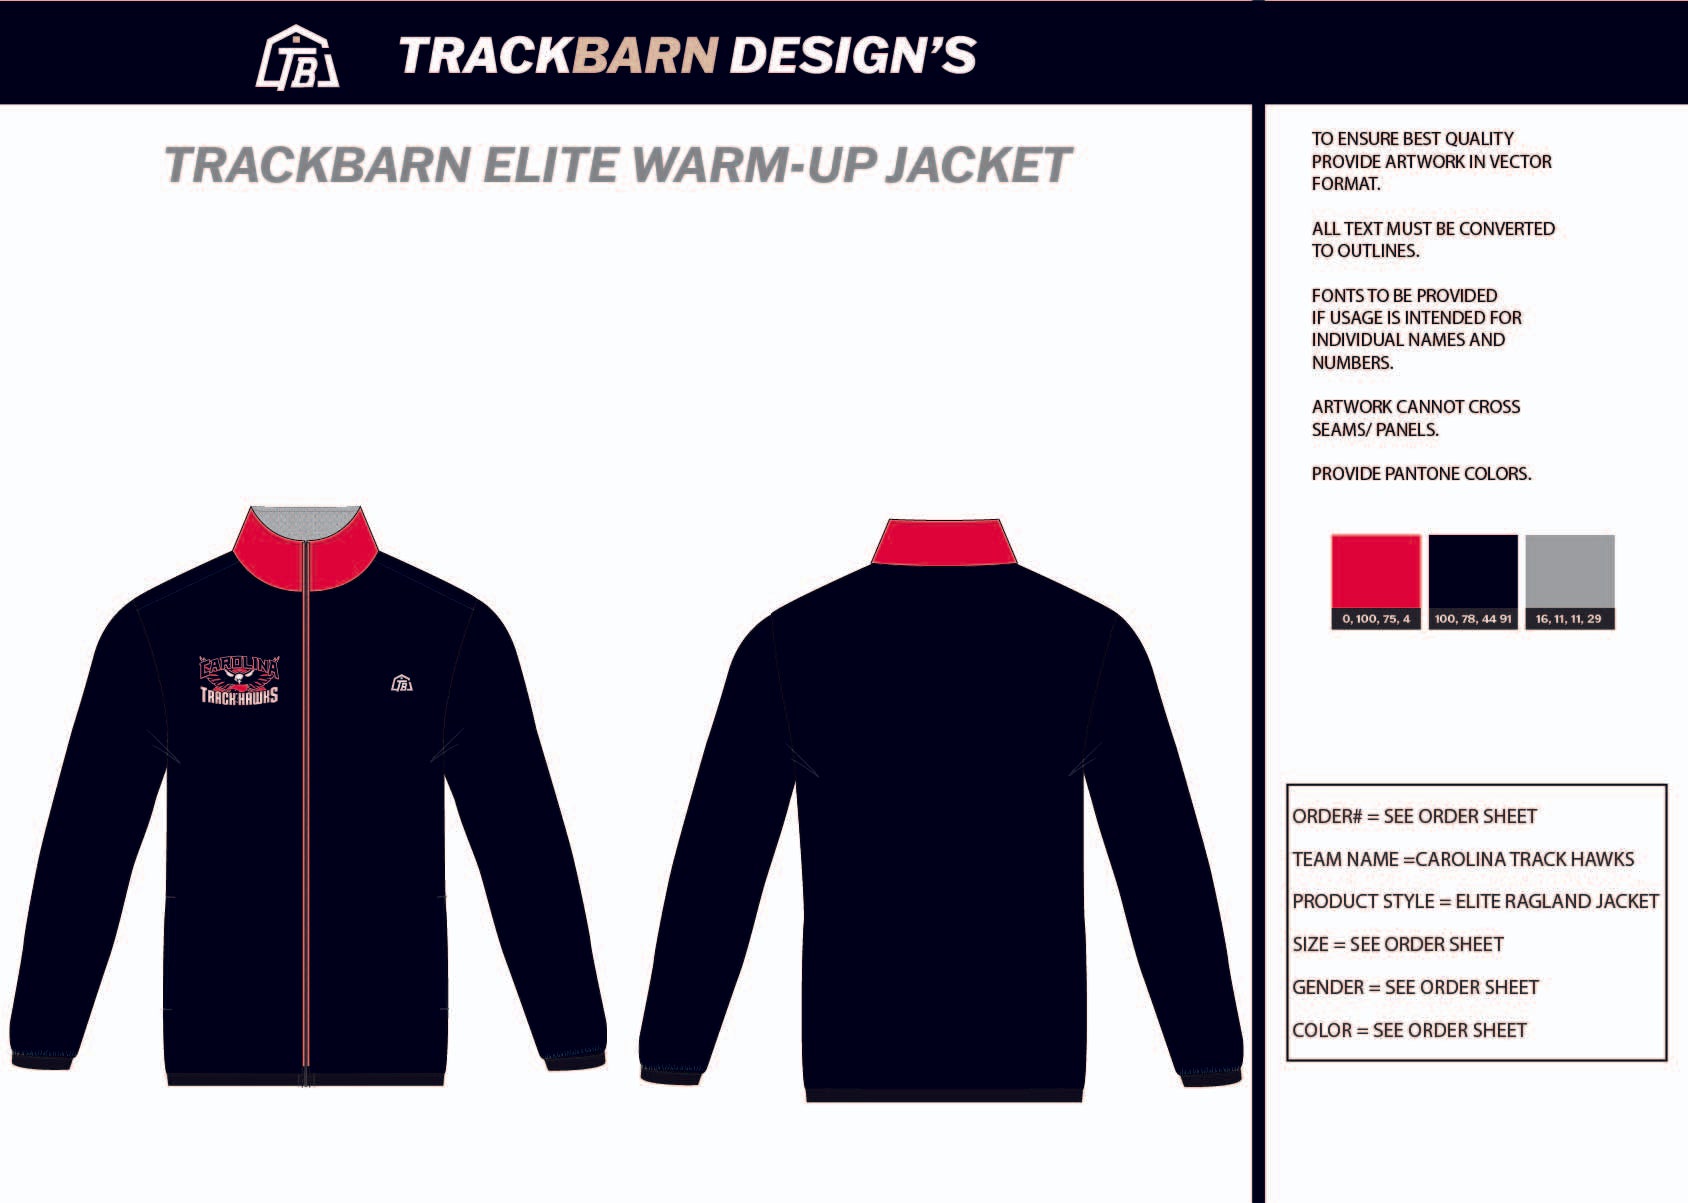 Carolina-Track-Hawks Womens Full Zip Jacket